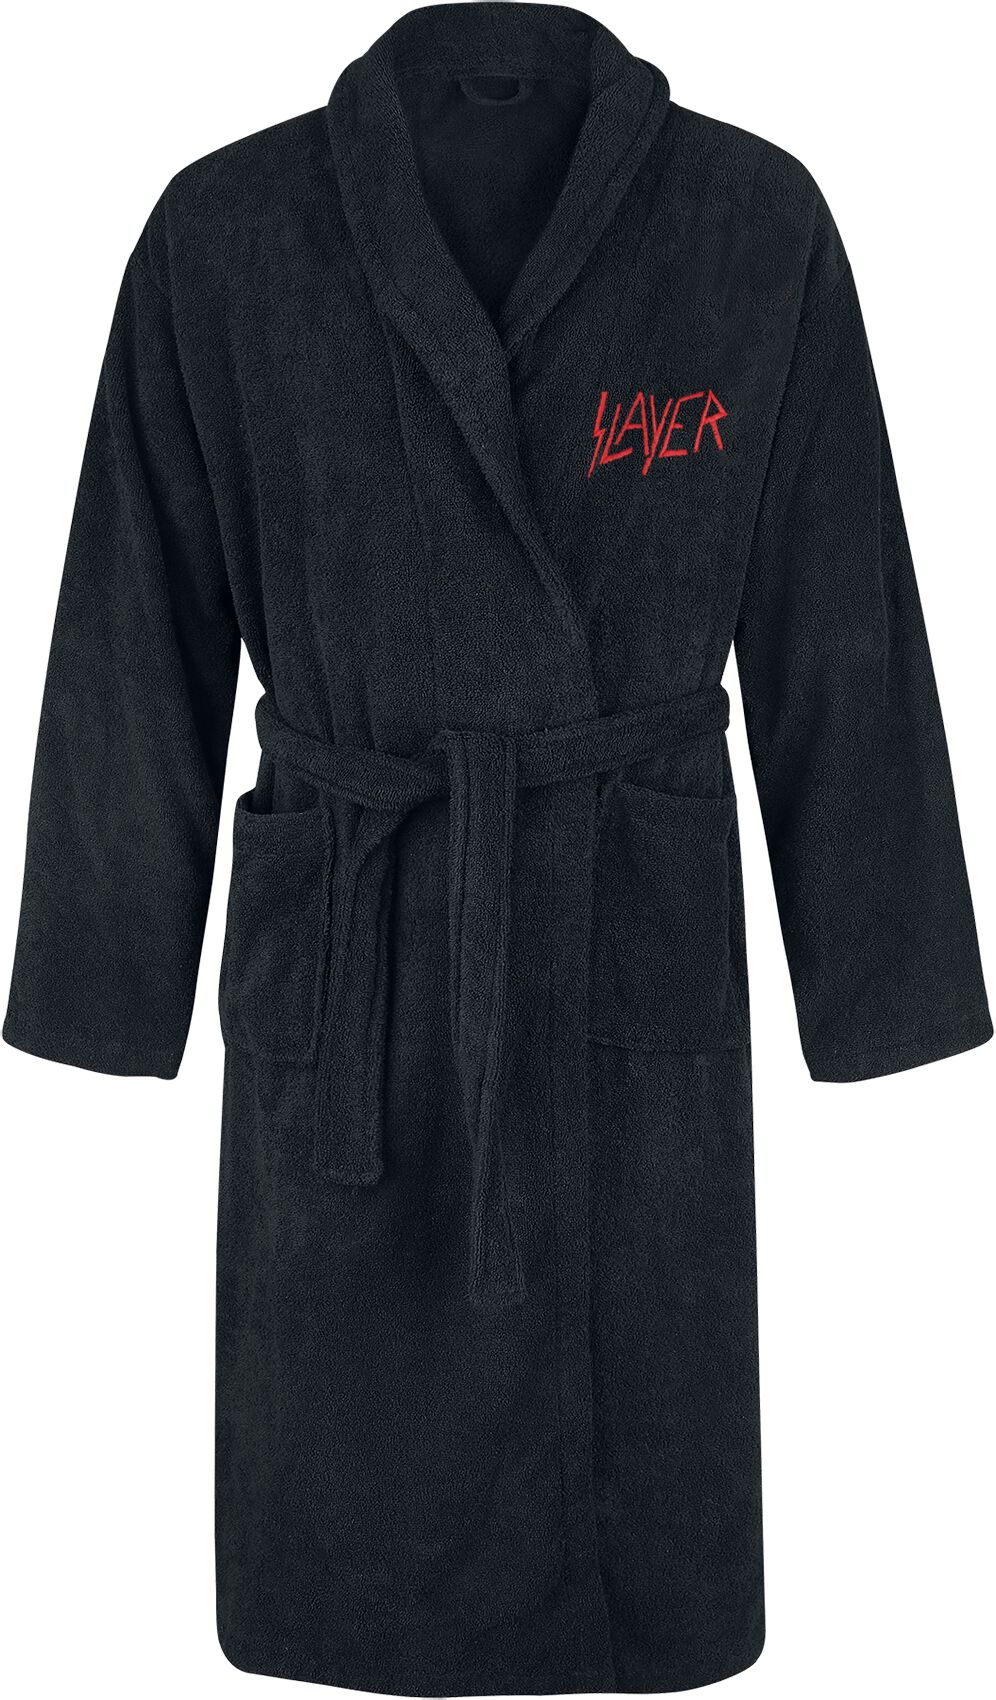 Slayer Logo Bademantel schwarz in L-XL